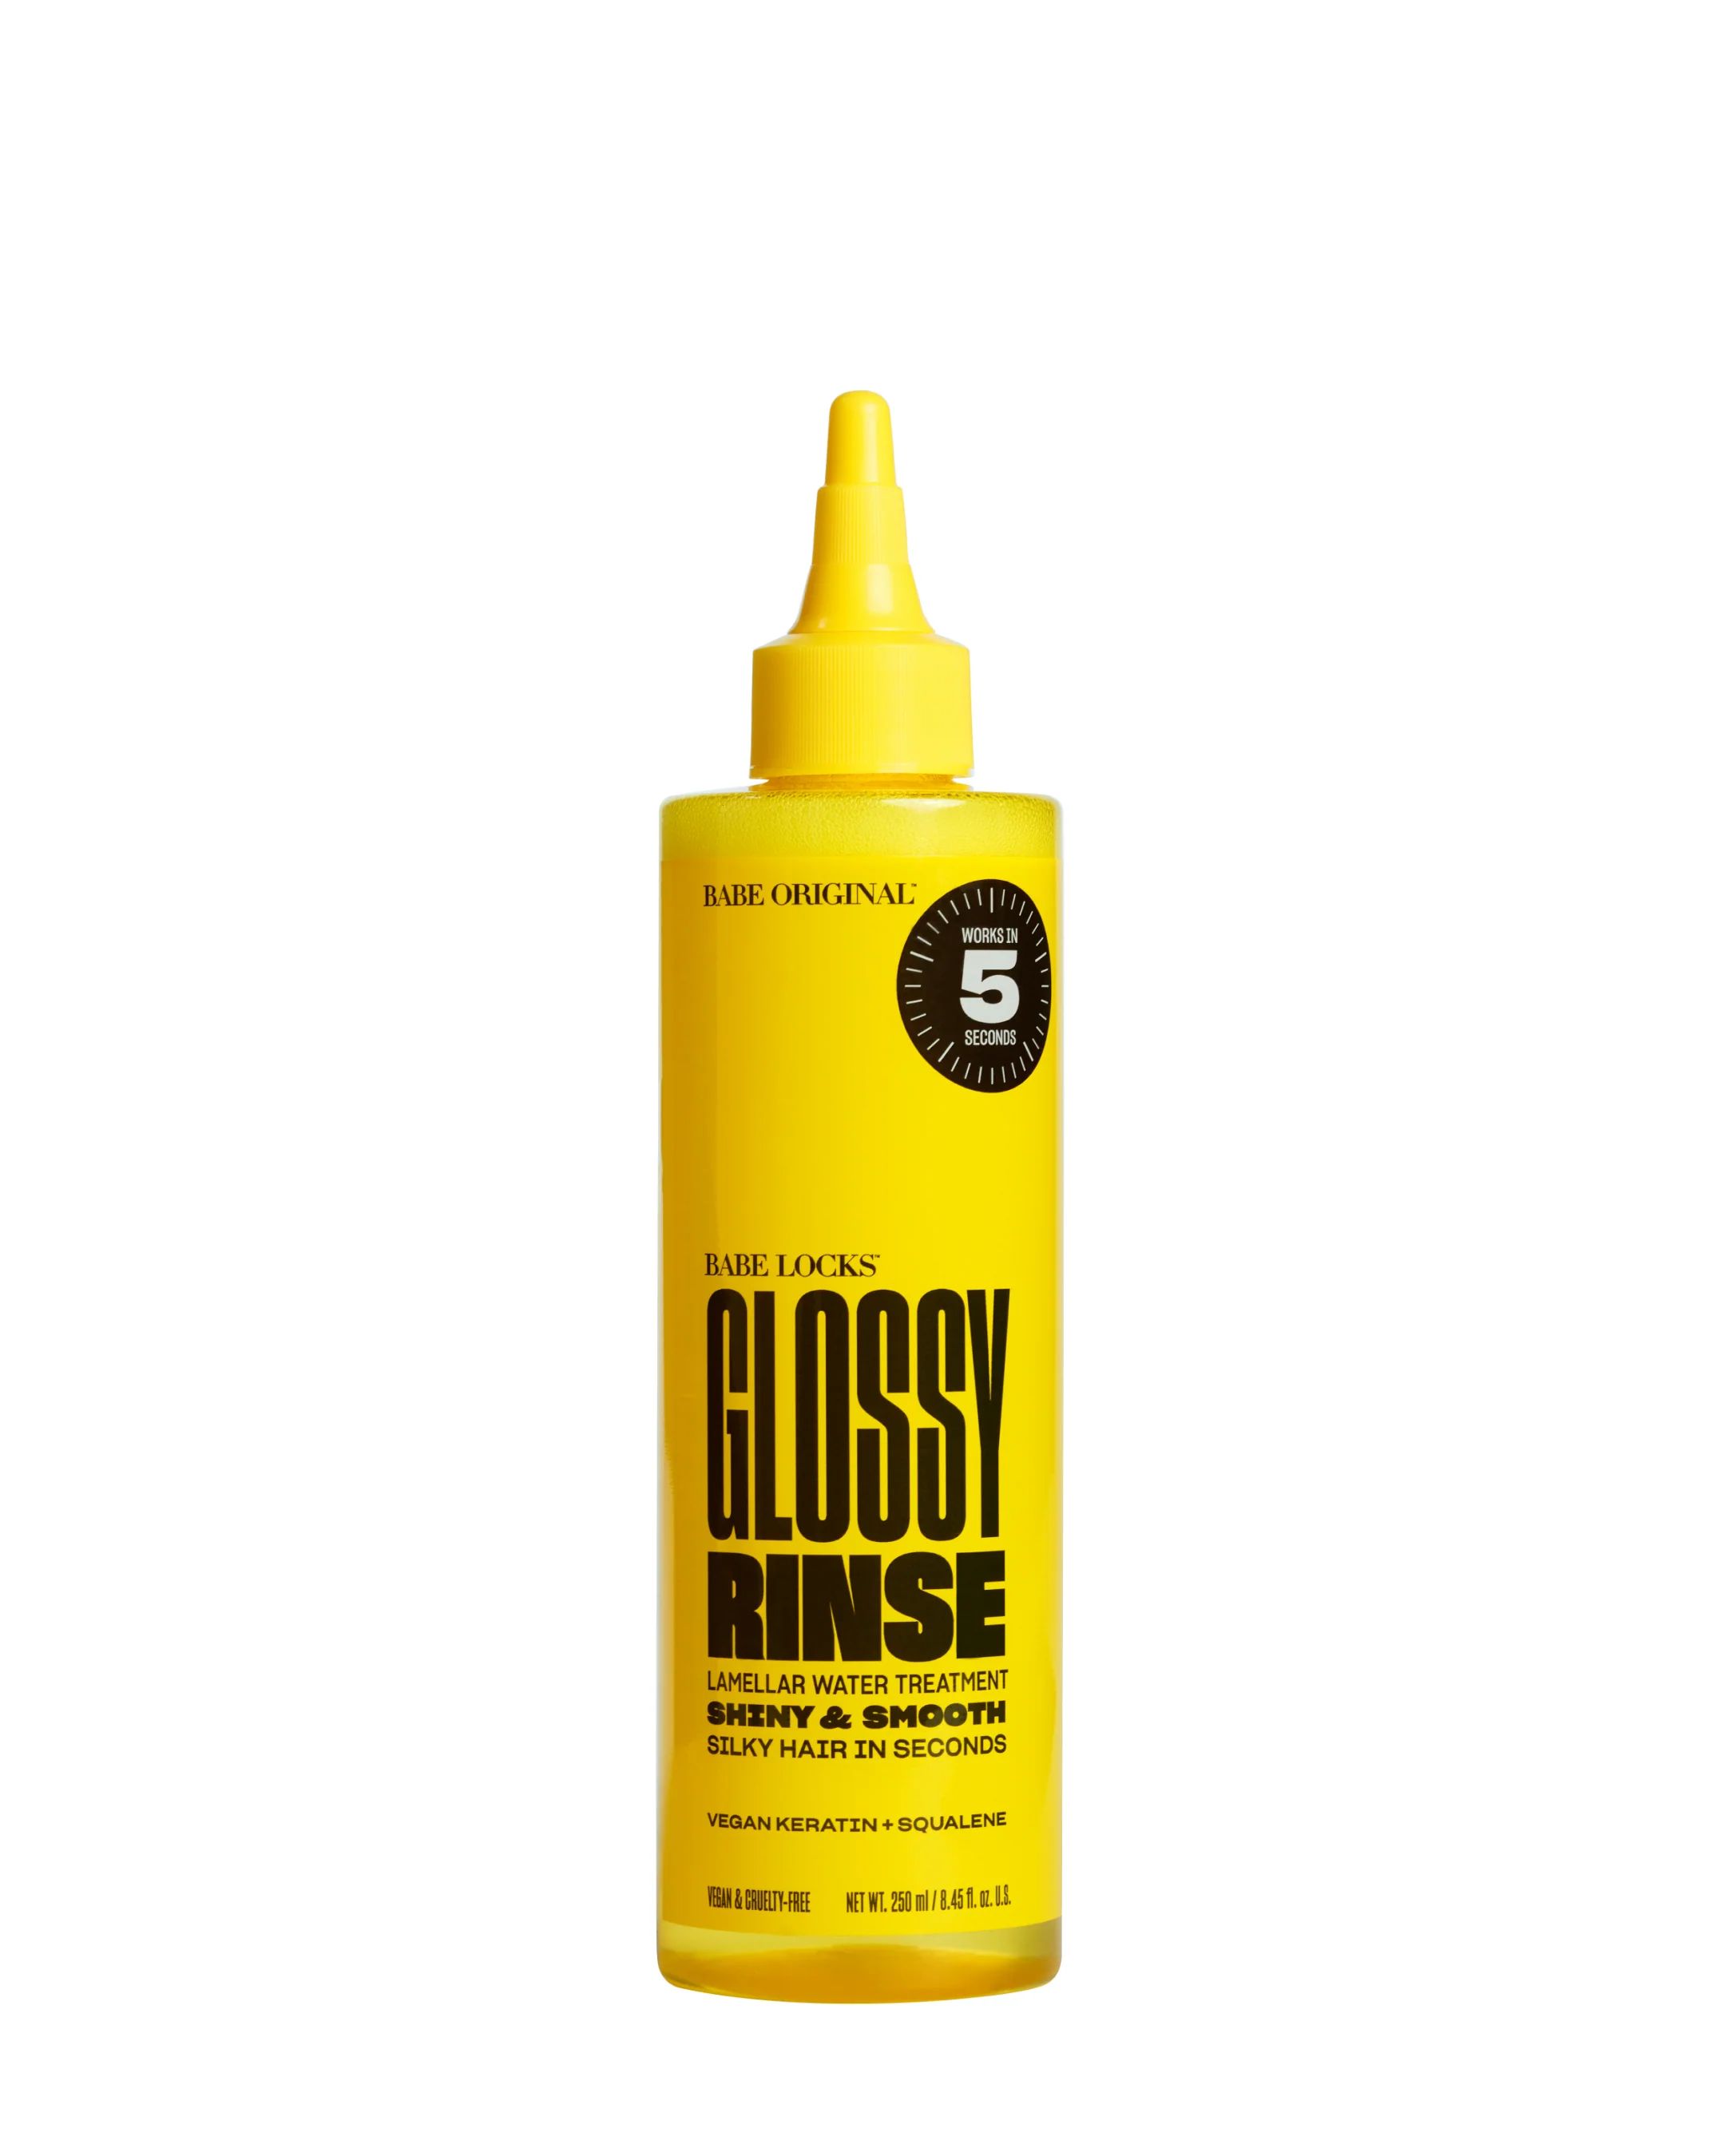 Glossy Rinse Hair Treatment | Babe Original